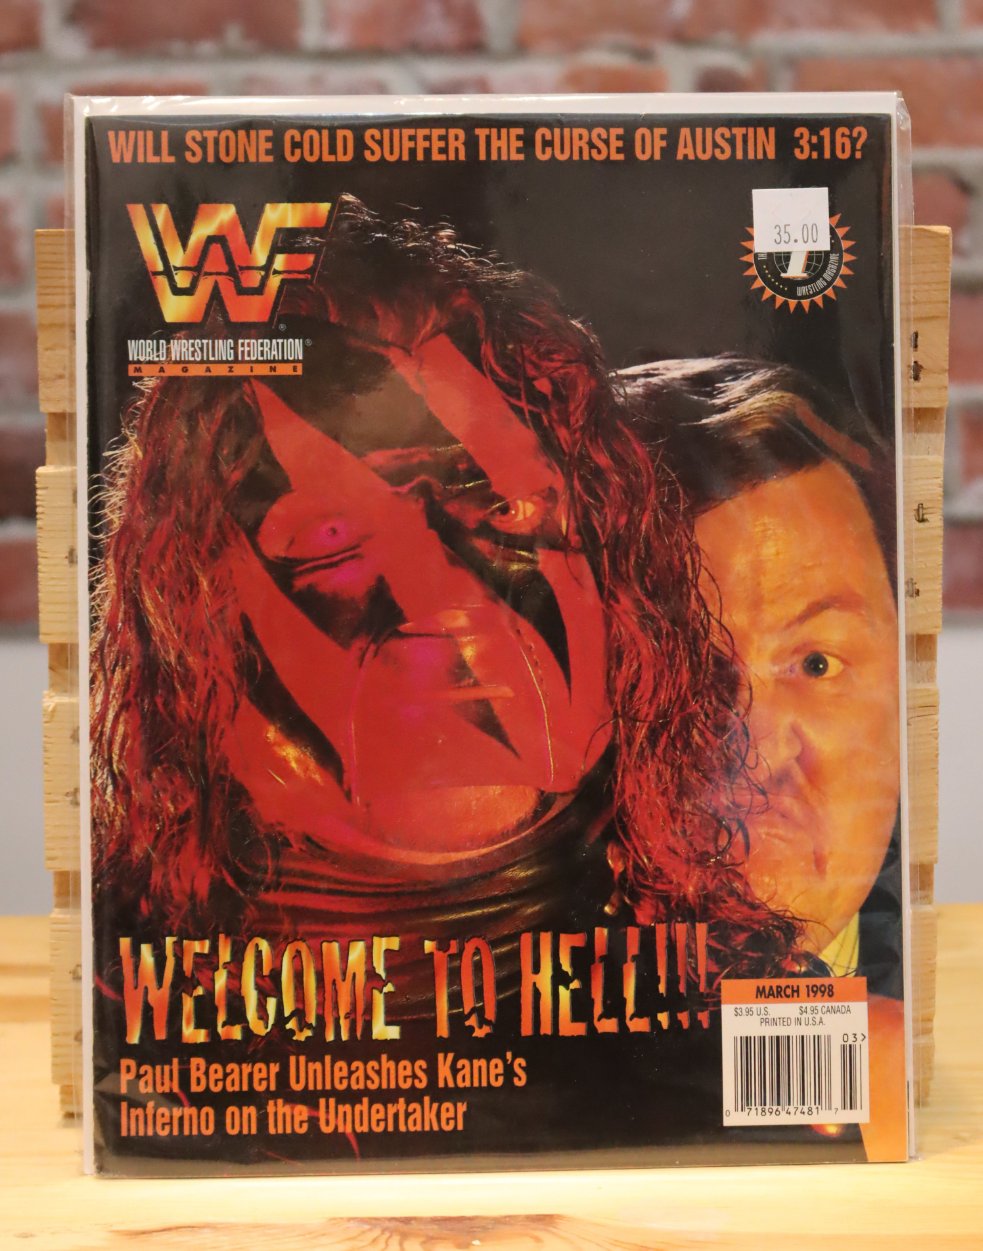 Original WWF WWE Vintage Wrestling Magazine Kane/Paul Bearer (March 1998)